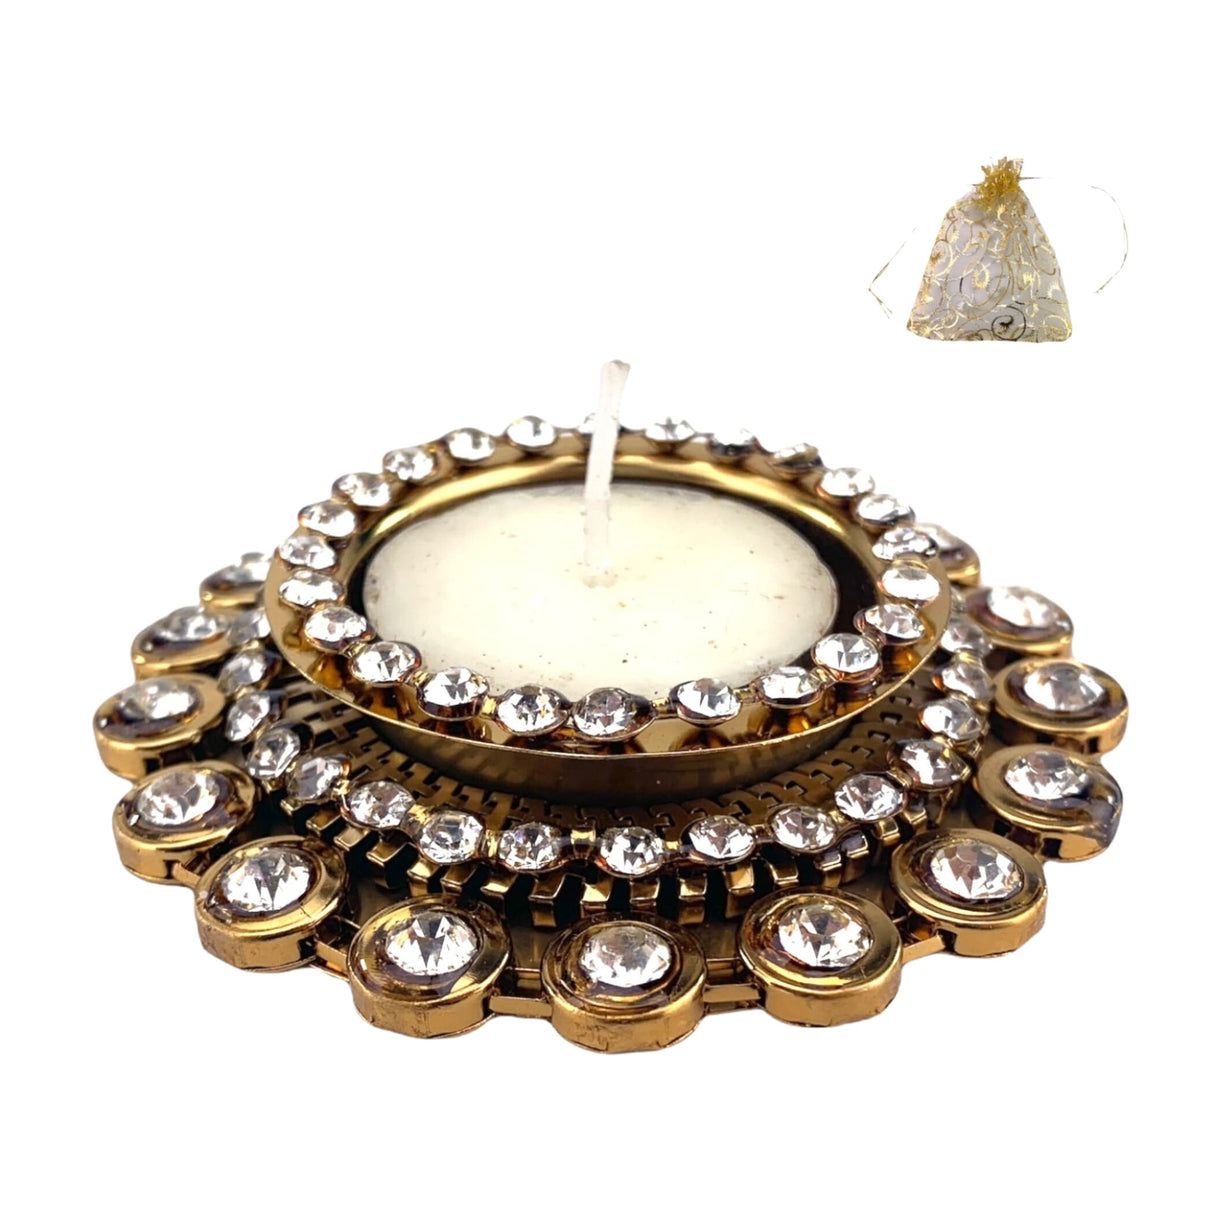 Candle holder t - light stand tealight diwali diya holders